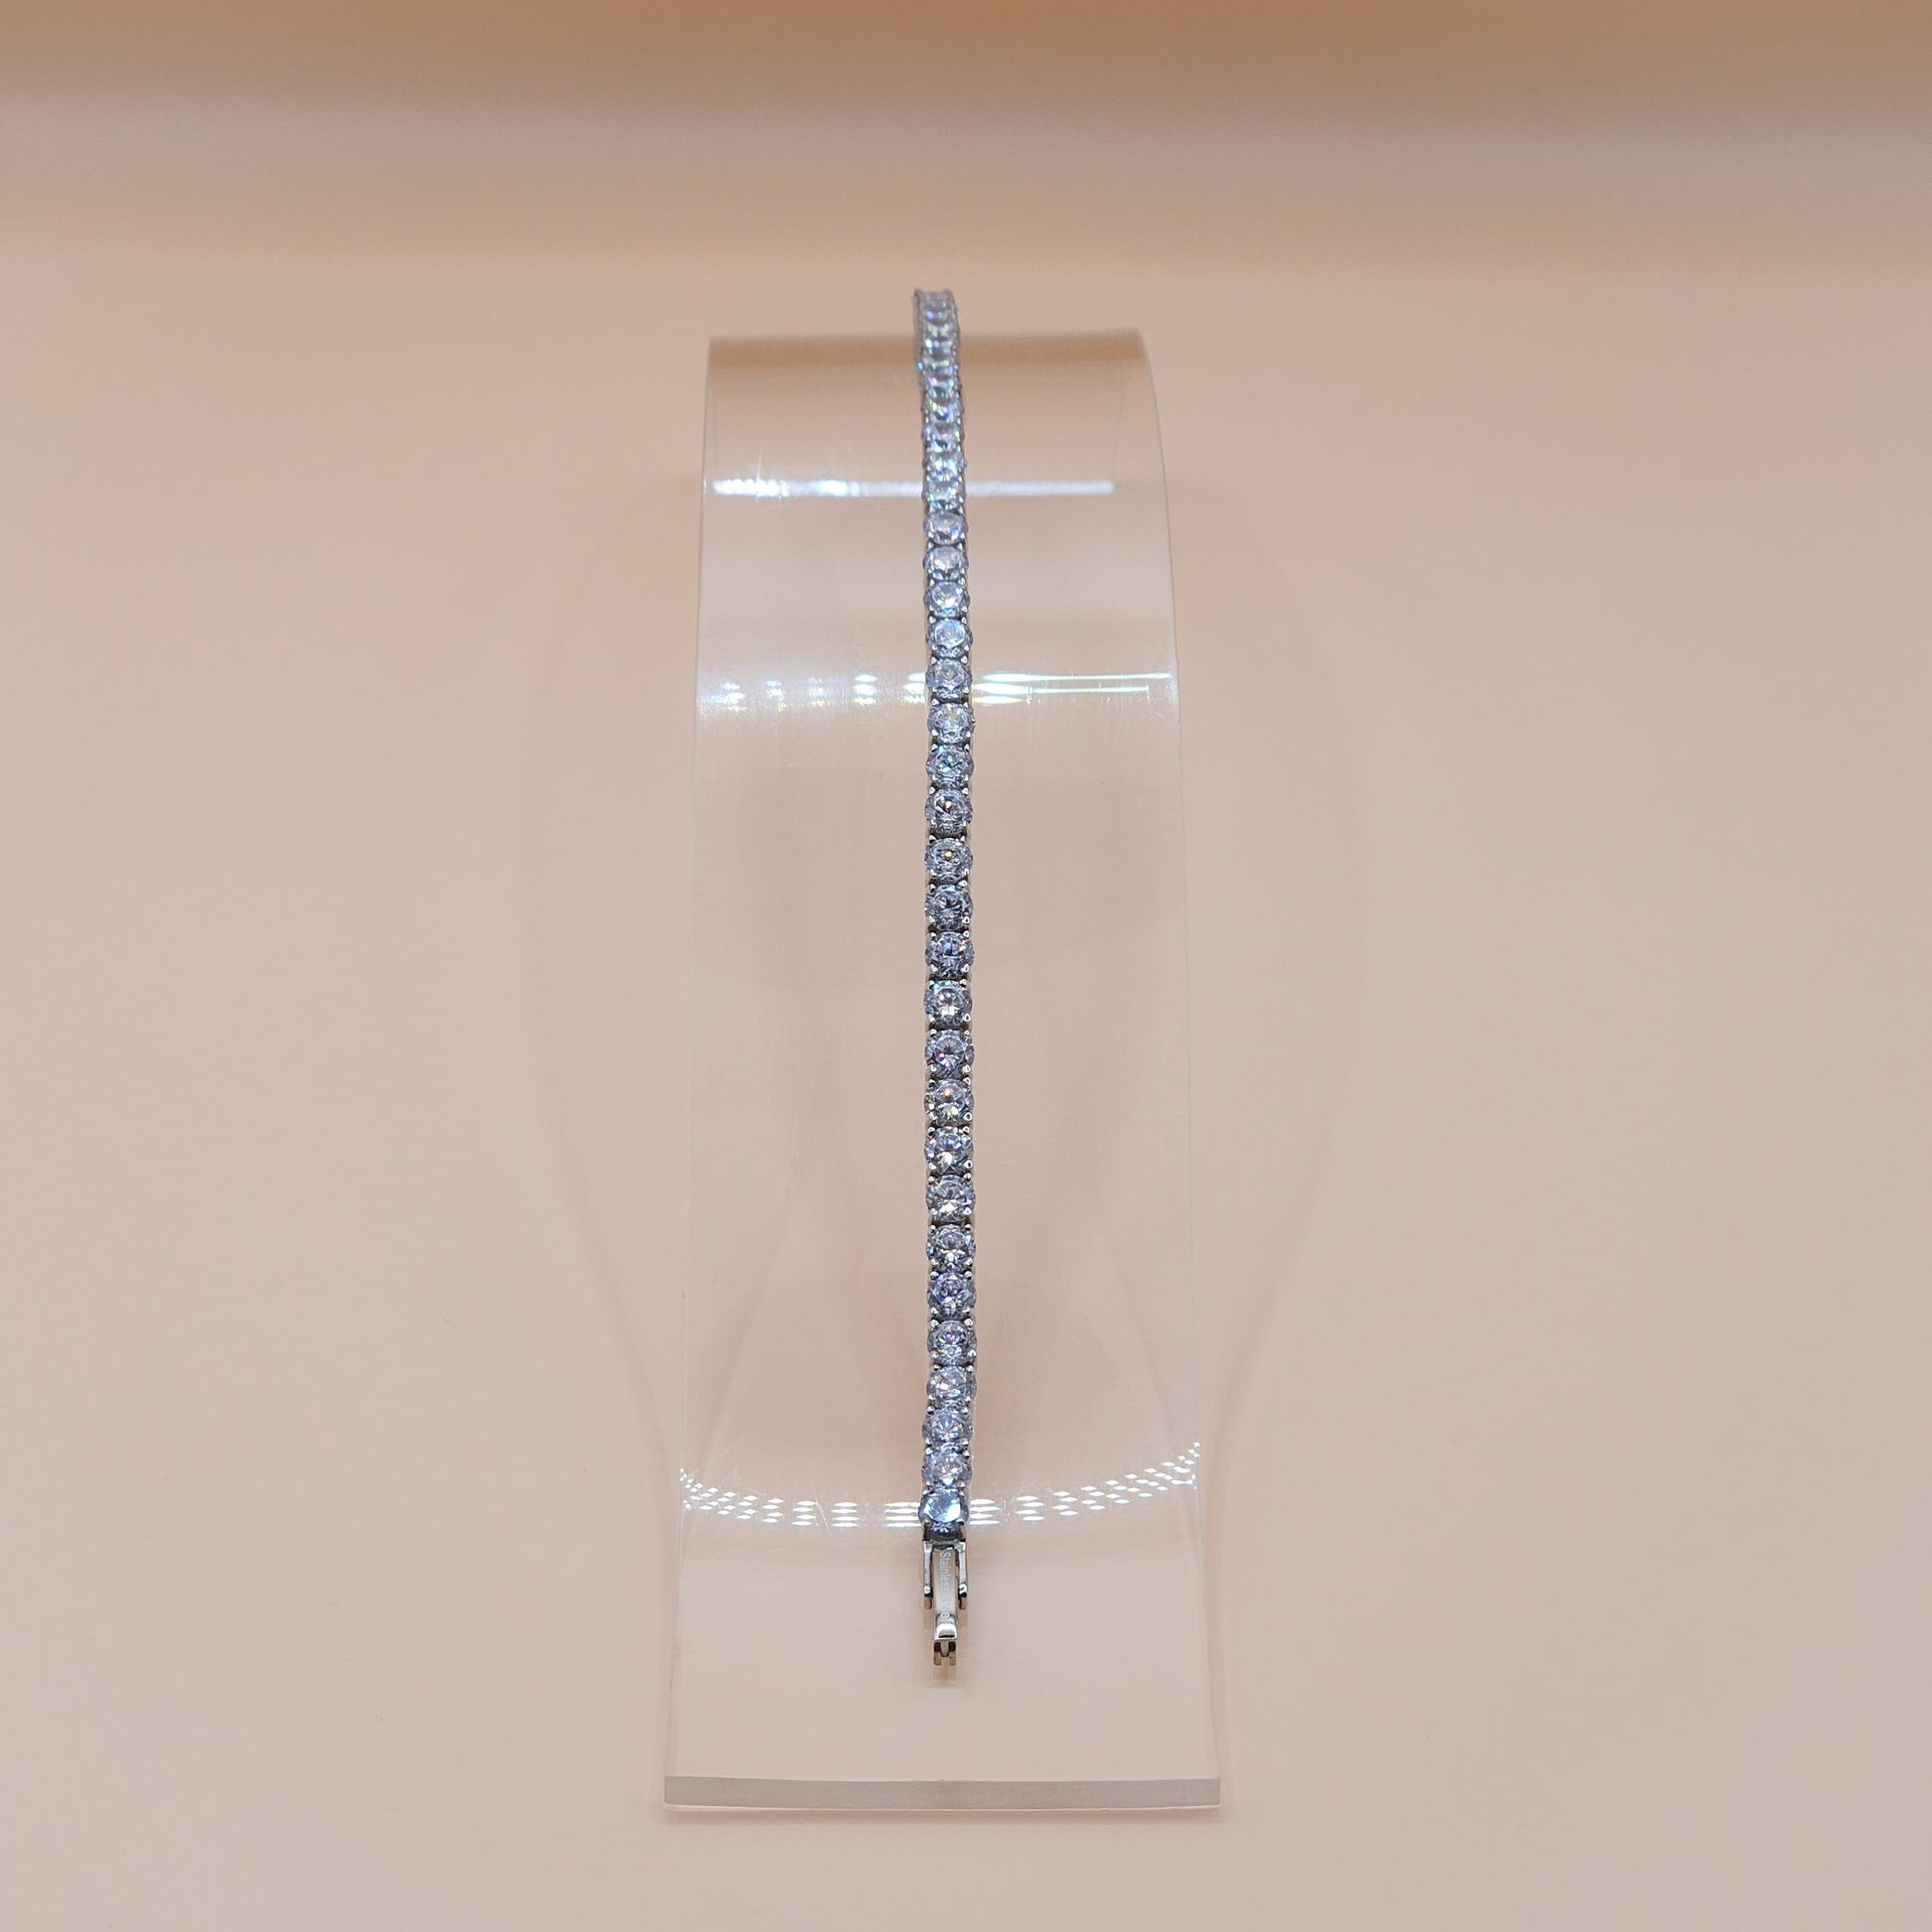 Perspex Acrylic Wavy Bracelet Display Stand | bracelet display pack | shop displays, craft market stall  jewellery display stands